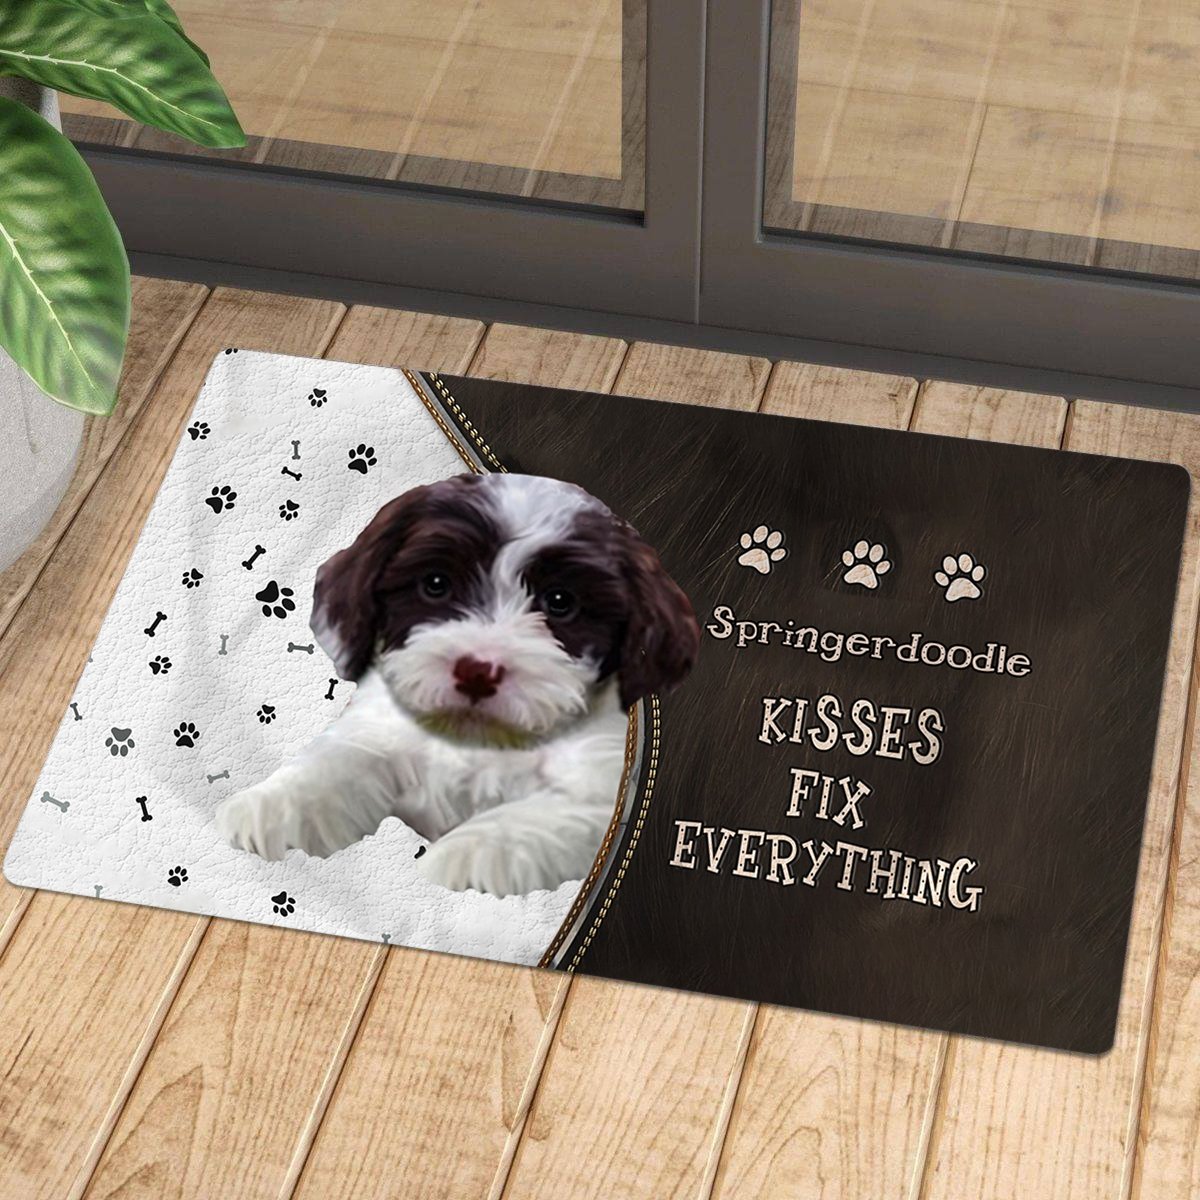 Springerdoodle Kisses Fix Everything Doormat